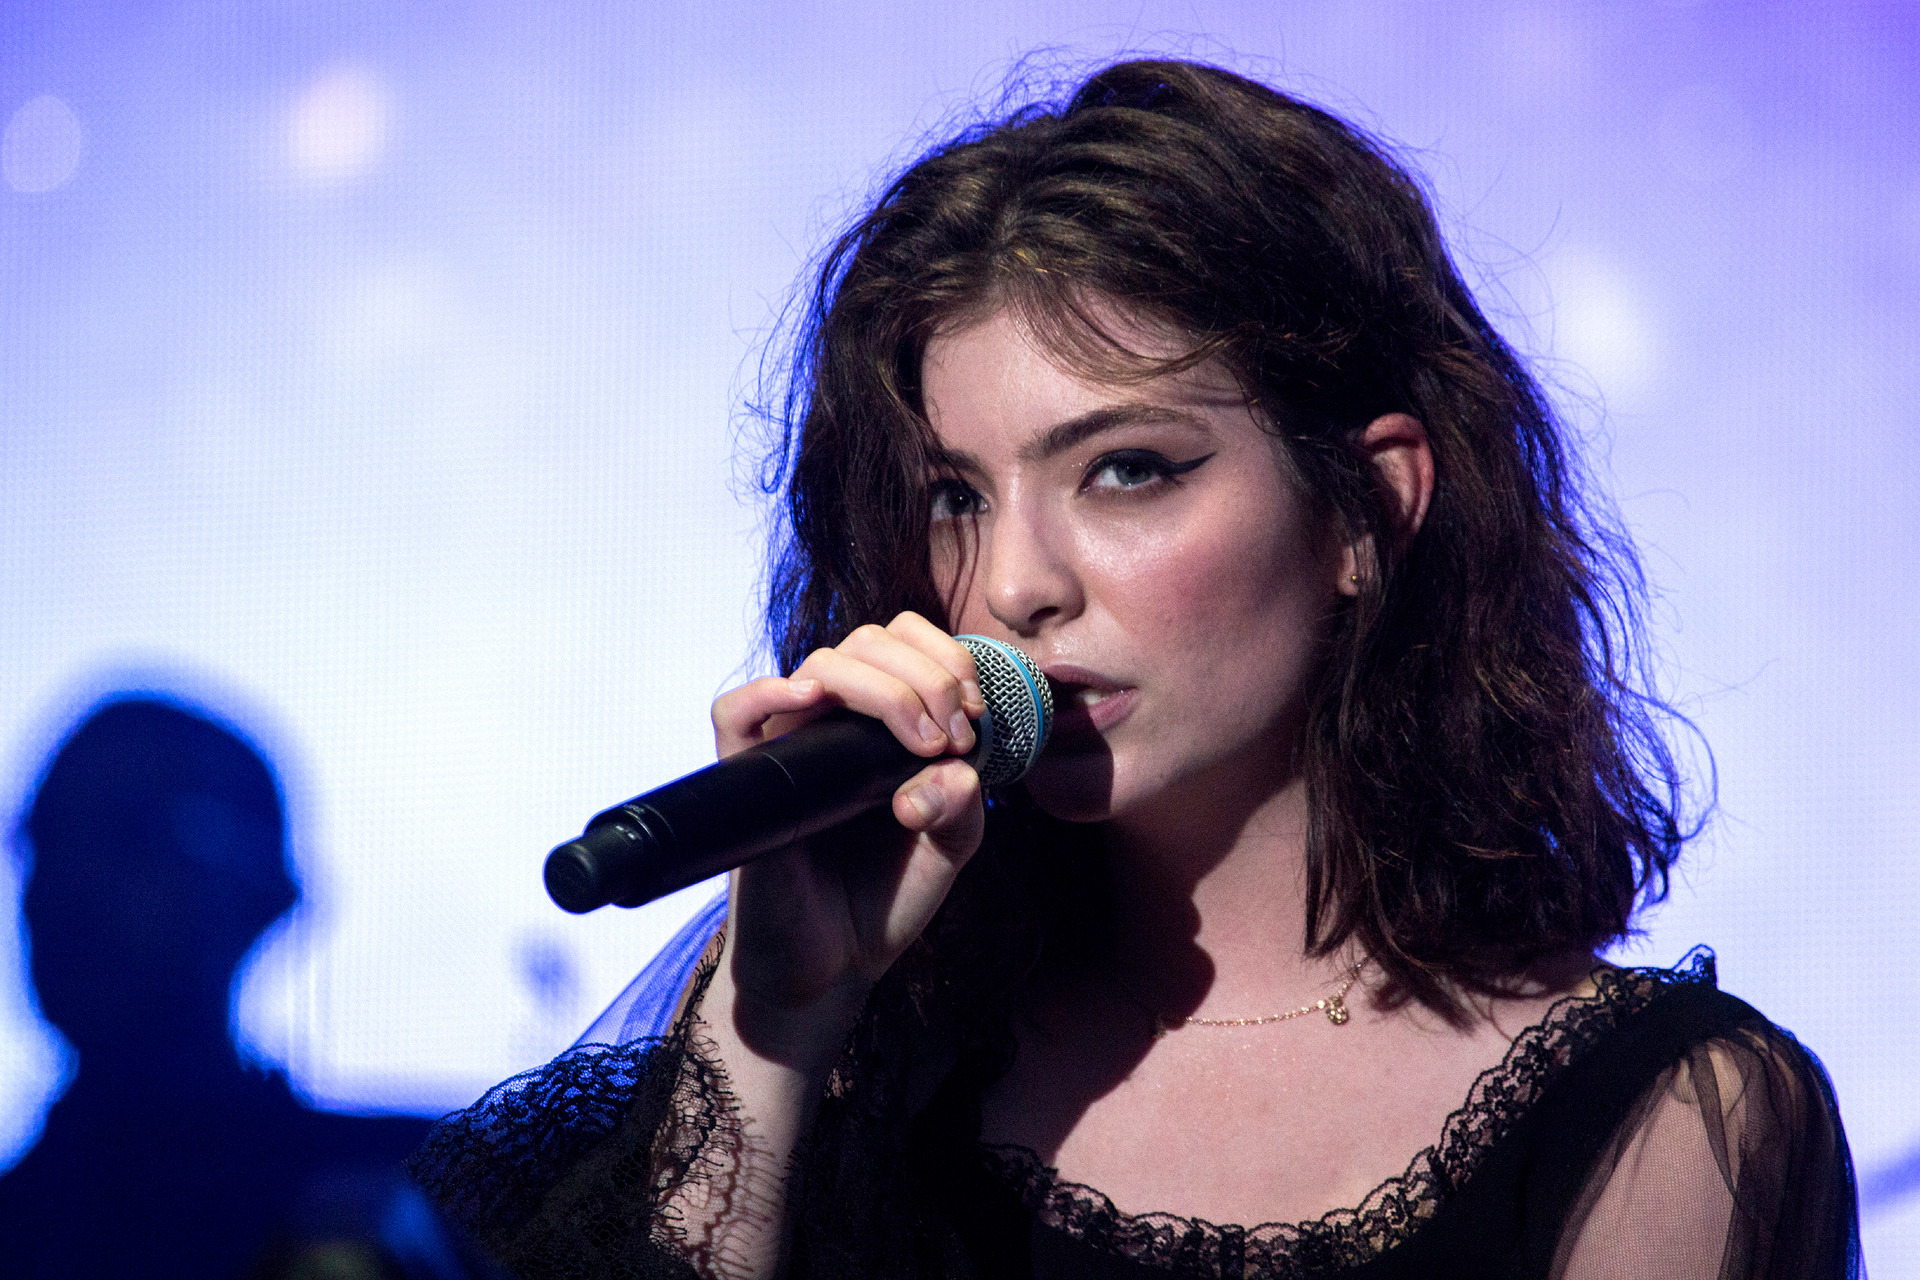 I see no imitation at work': Set designer weighs in on Lorde, Kanye West  accusation